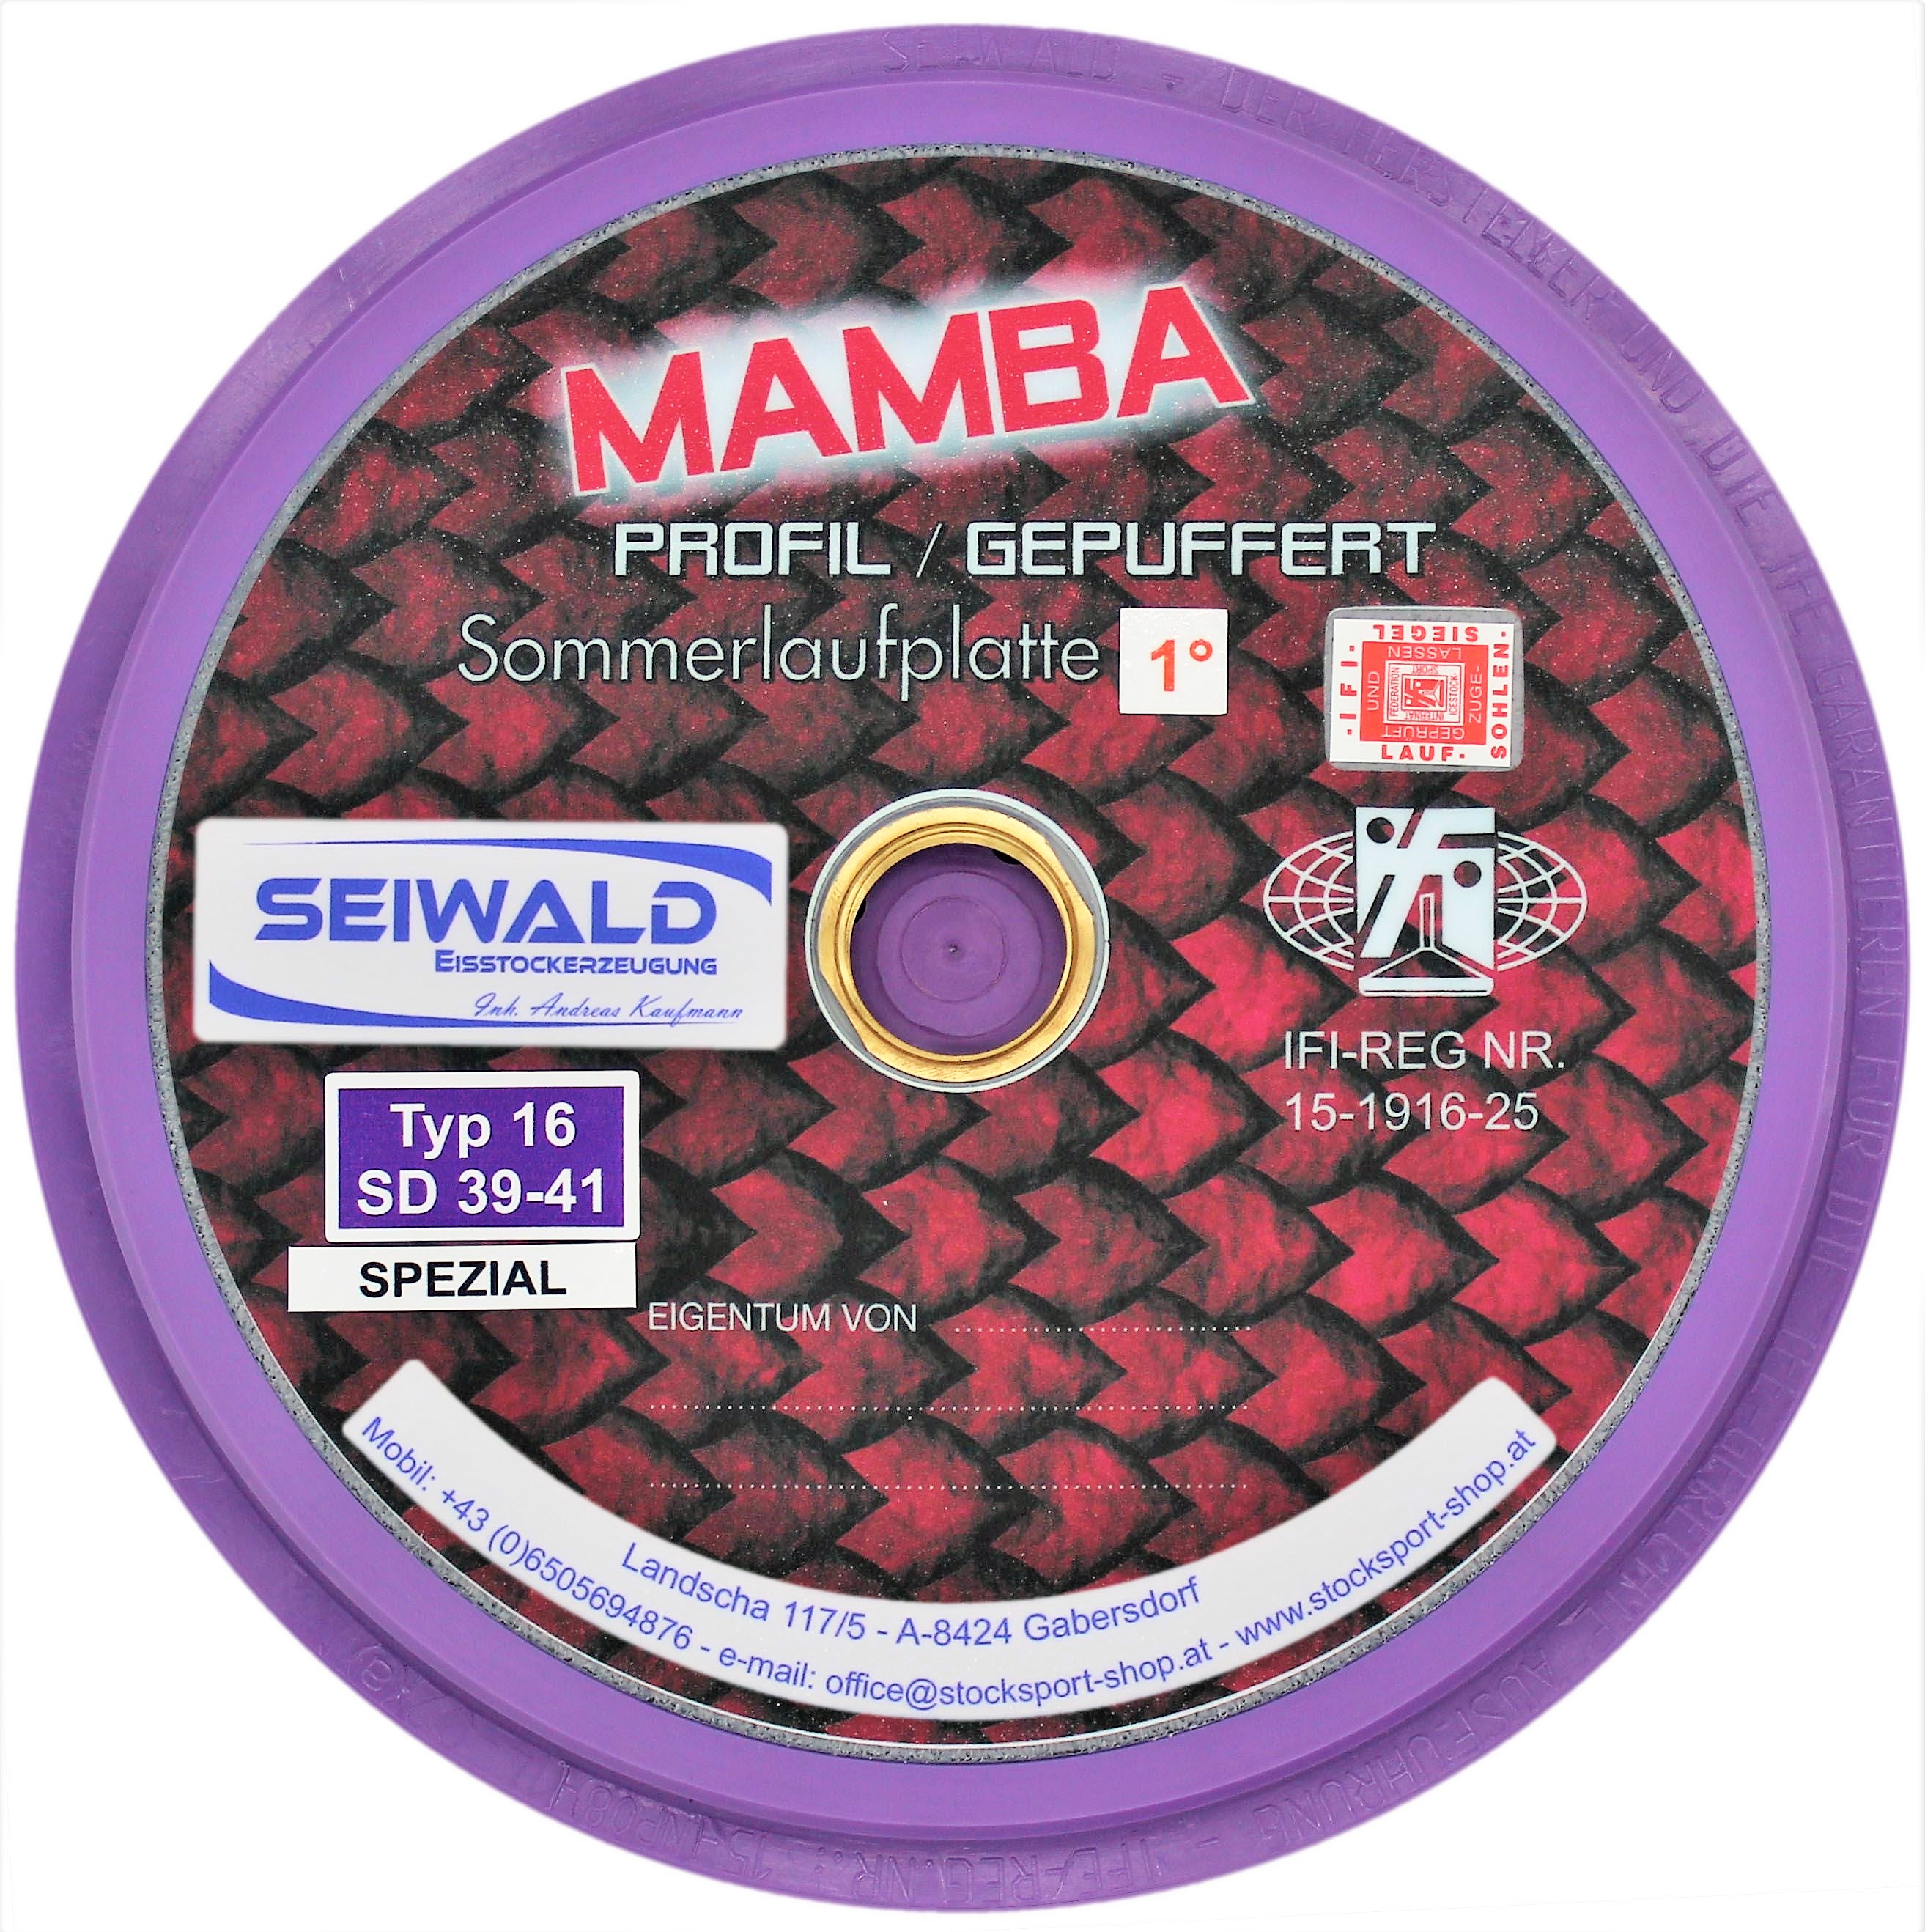 SEIWALD Mamba Profil Spezial Lila / Langsame Mass und Stockplatt